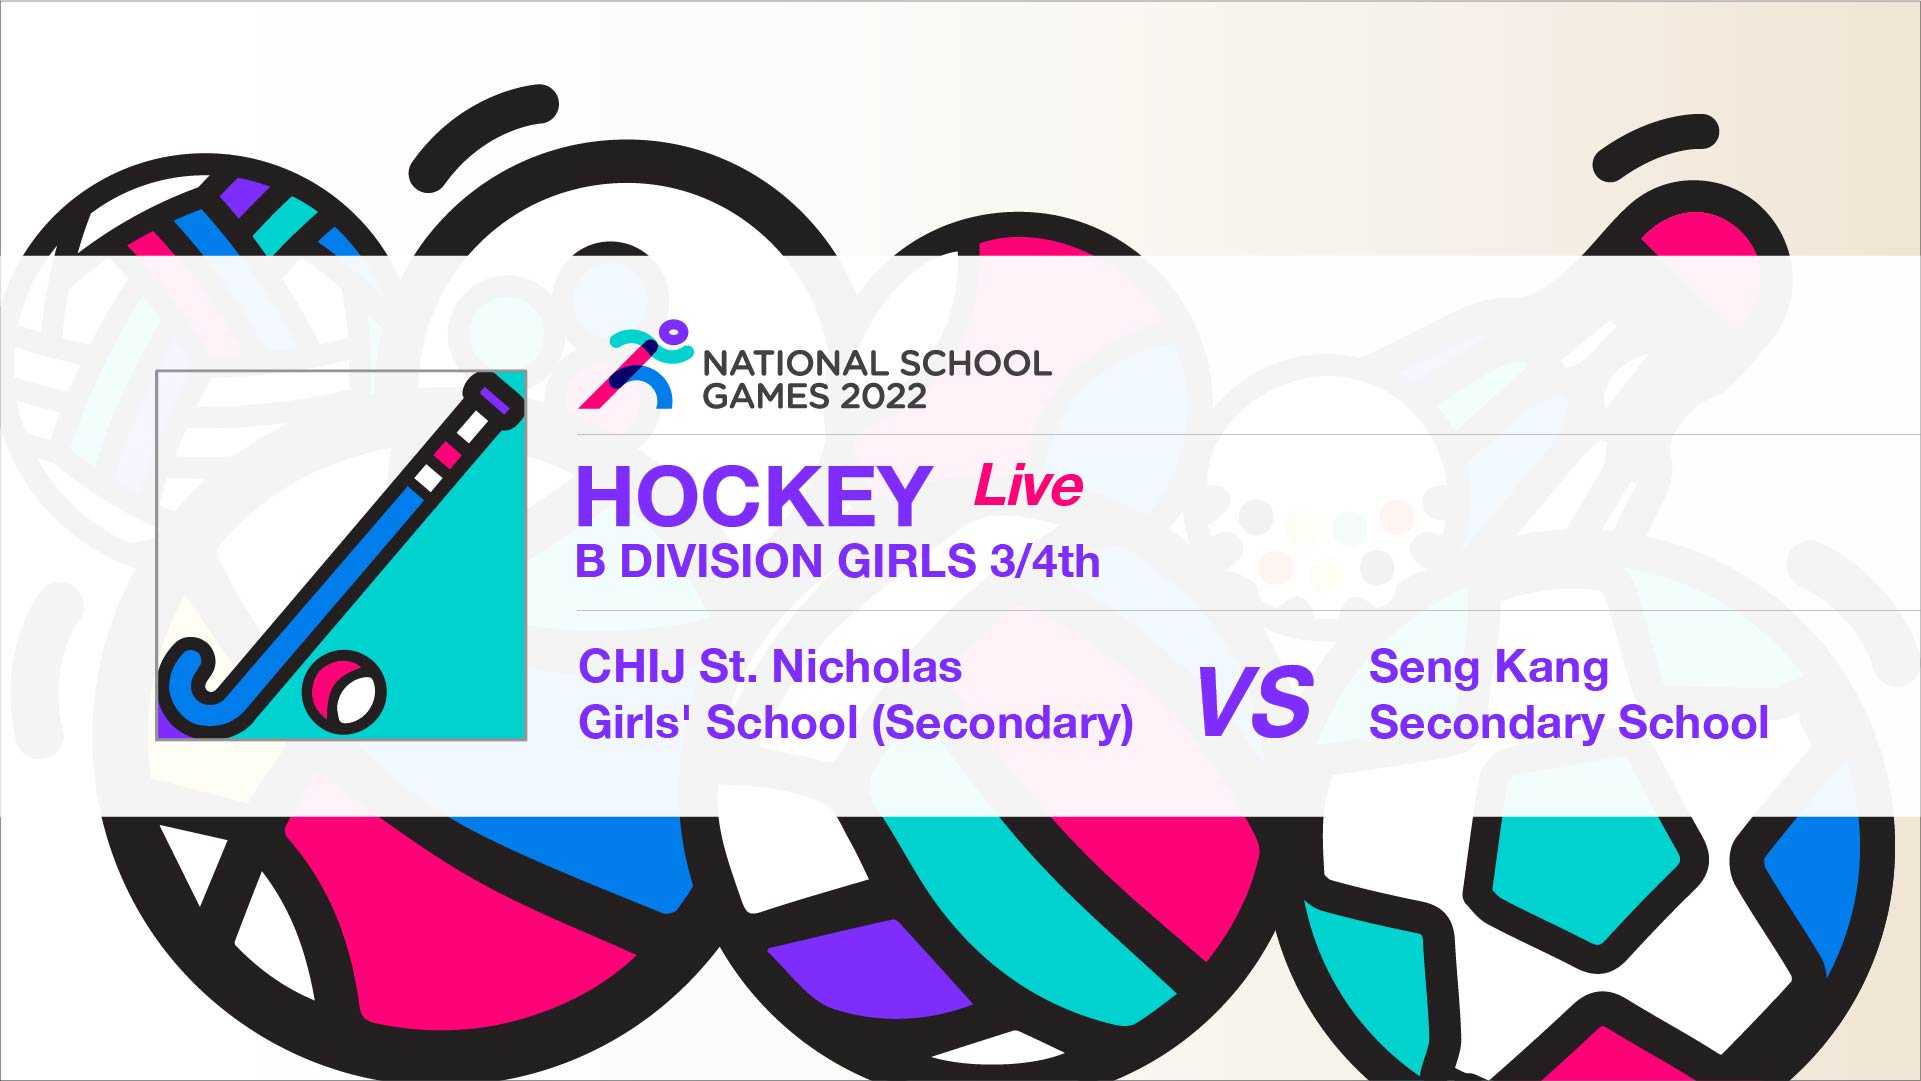 SSSC Hockey B Division Girls 3rd/4th | CHIJ St. Nicholas Girls' School (Secondary) vs Seng Kang Secondary School